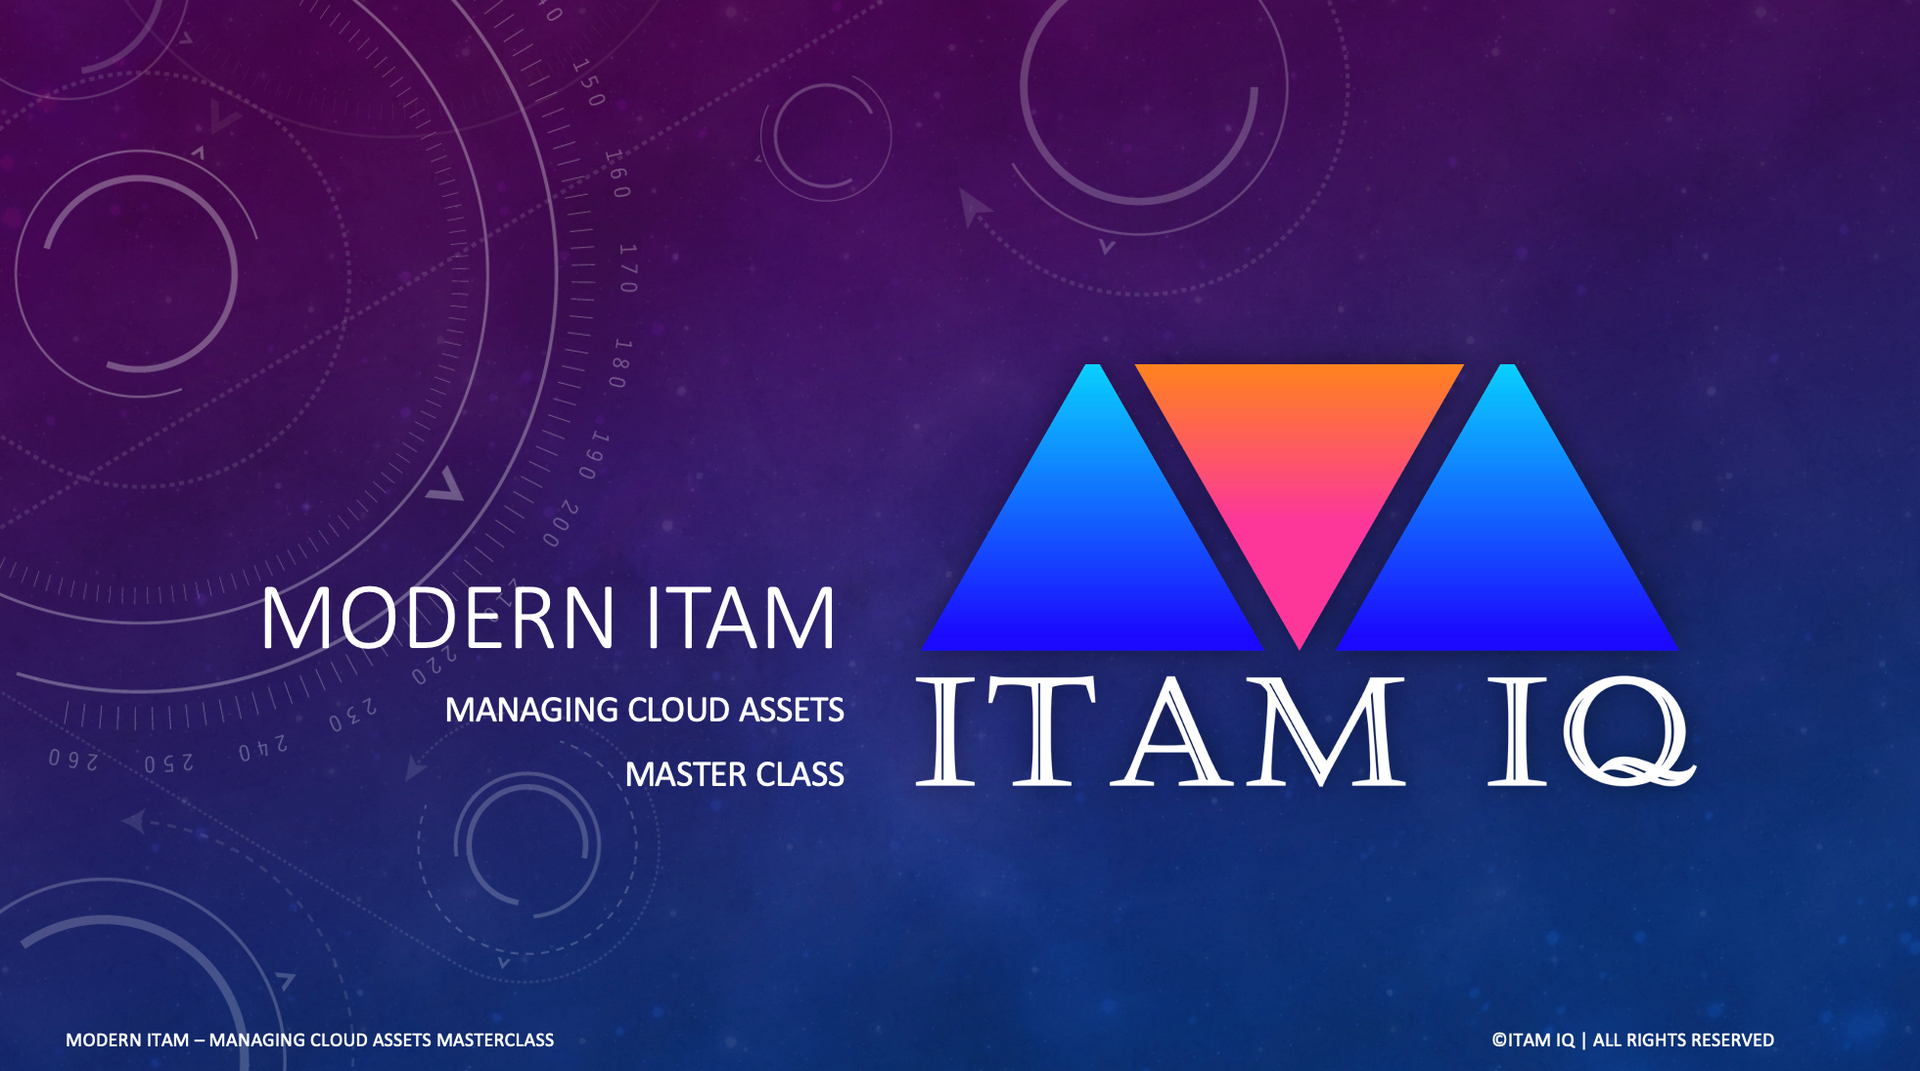 ITAM IQ's Modern ITAM - Managing Cloud Asset Master Class